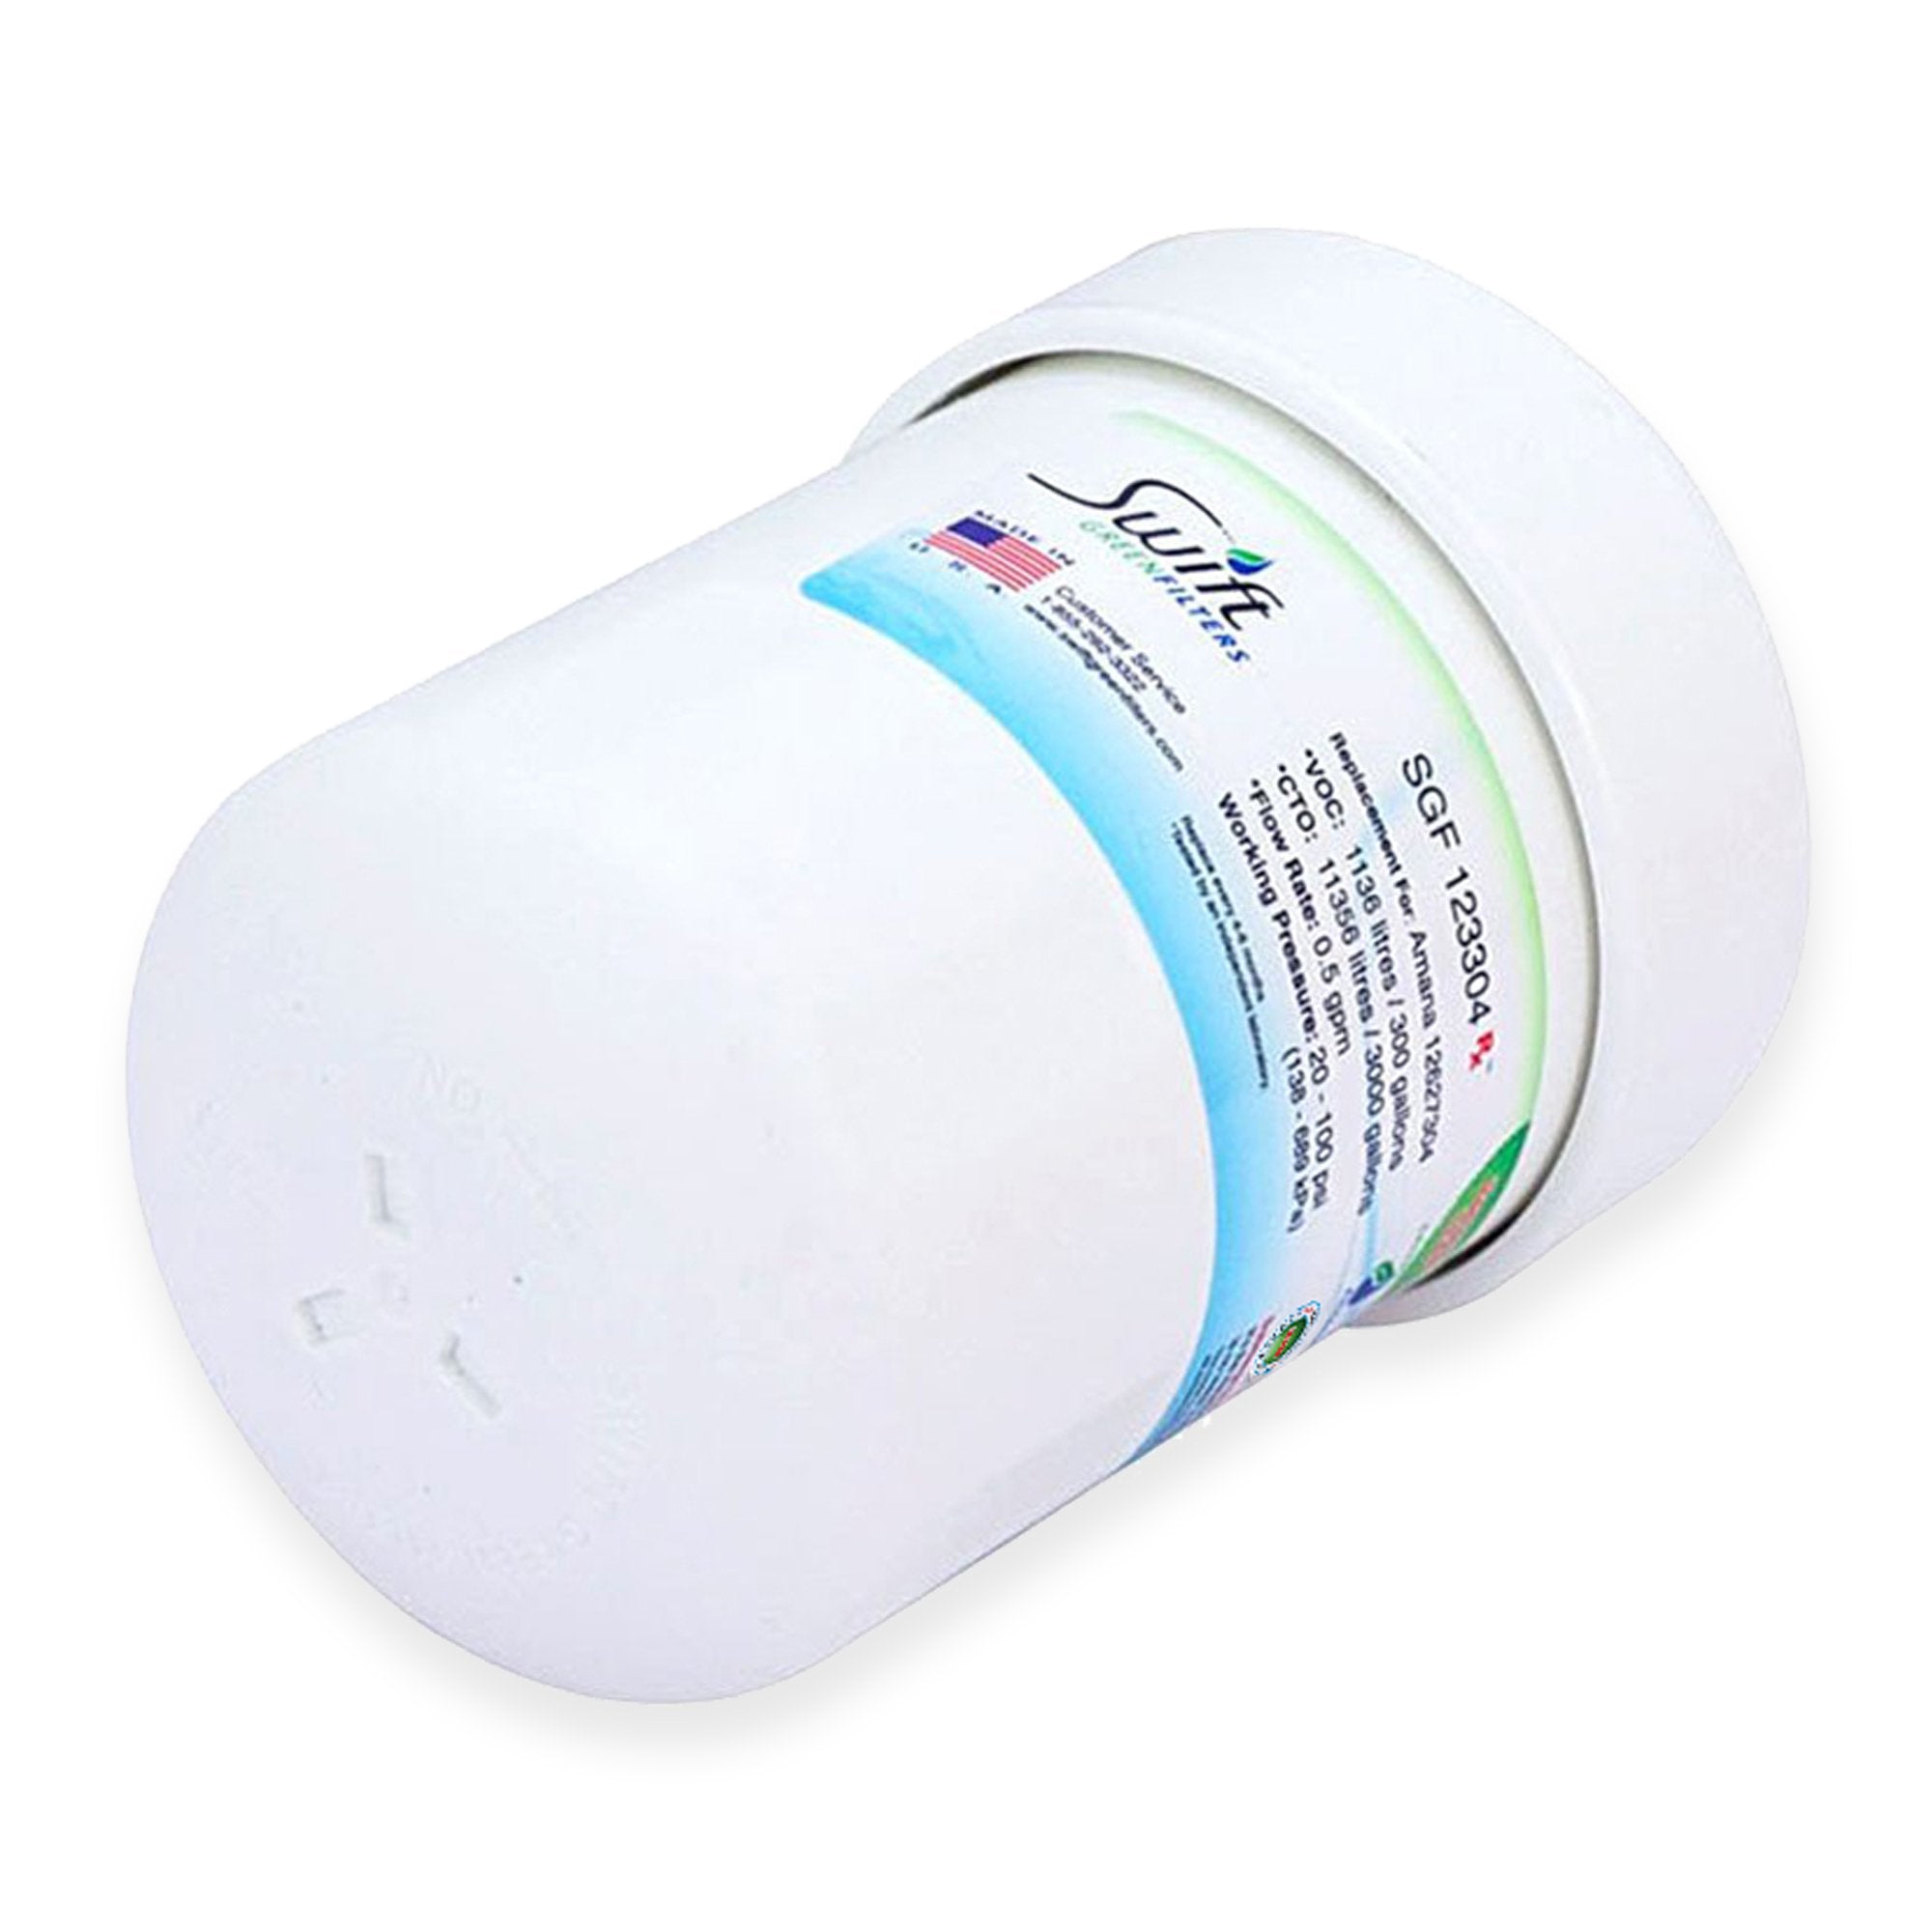 Amana WF-30, EcoAqua EFF-6021A & Kenmore 46-9014 Compatible Pharmaceutical Refrigerator Water Filter